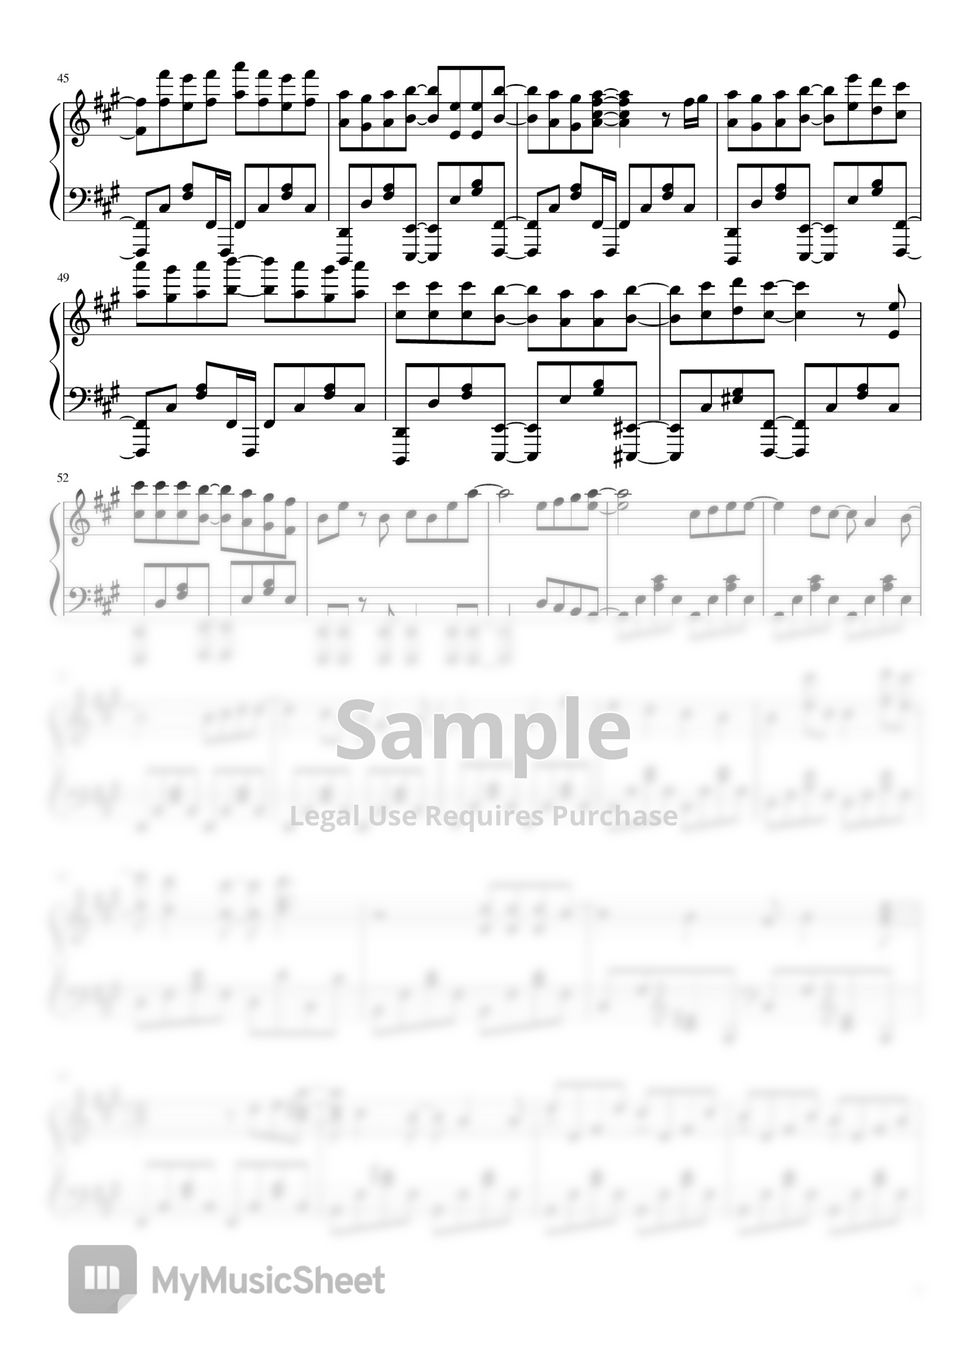 Hikaru Nara Sheet Music - 11 Arrangements Available Instantly - Musicnotes